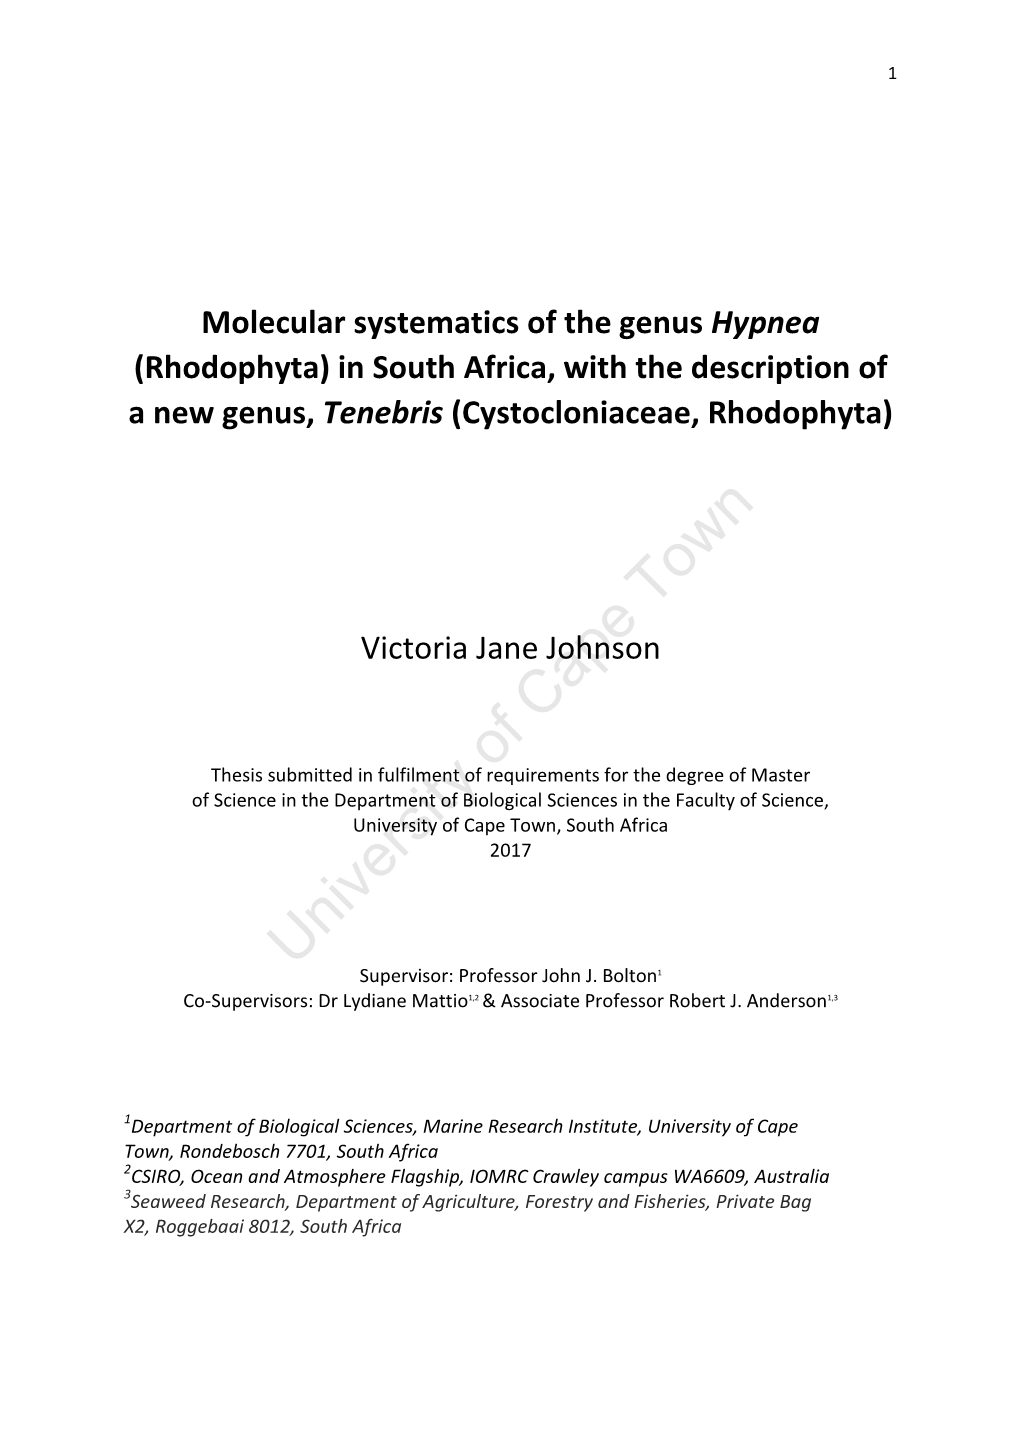 Molecular Systematics of the Genus Hypnea (Rhodophyta) in South Africa, with the Description of a New Genus, Tenebris (Cystocloniaceae, Rhodophyta)